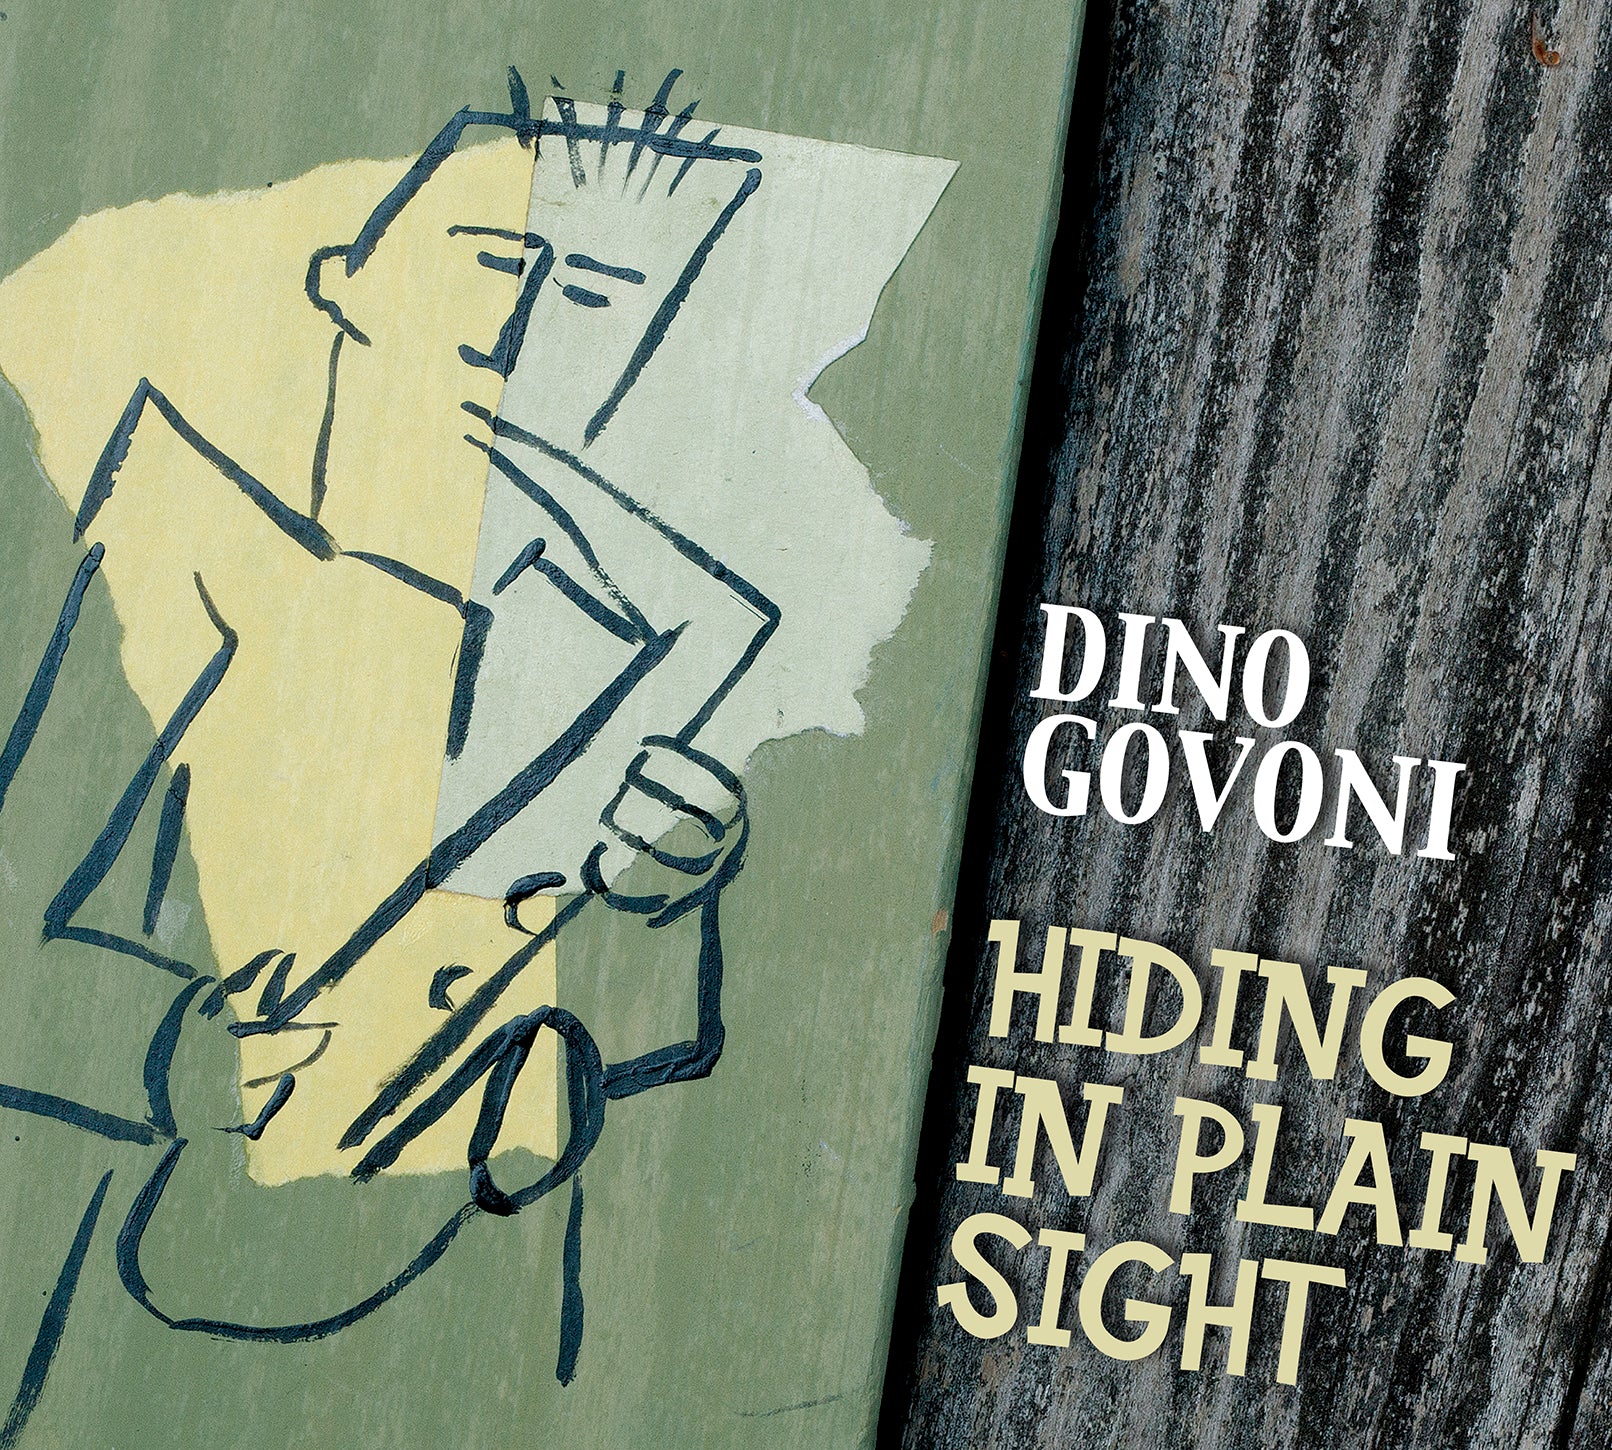 Hiding in Plain Sight / Dino Govoni